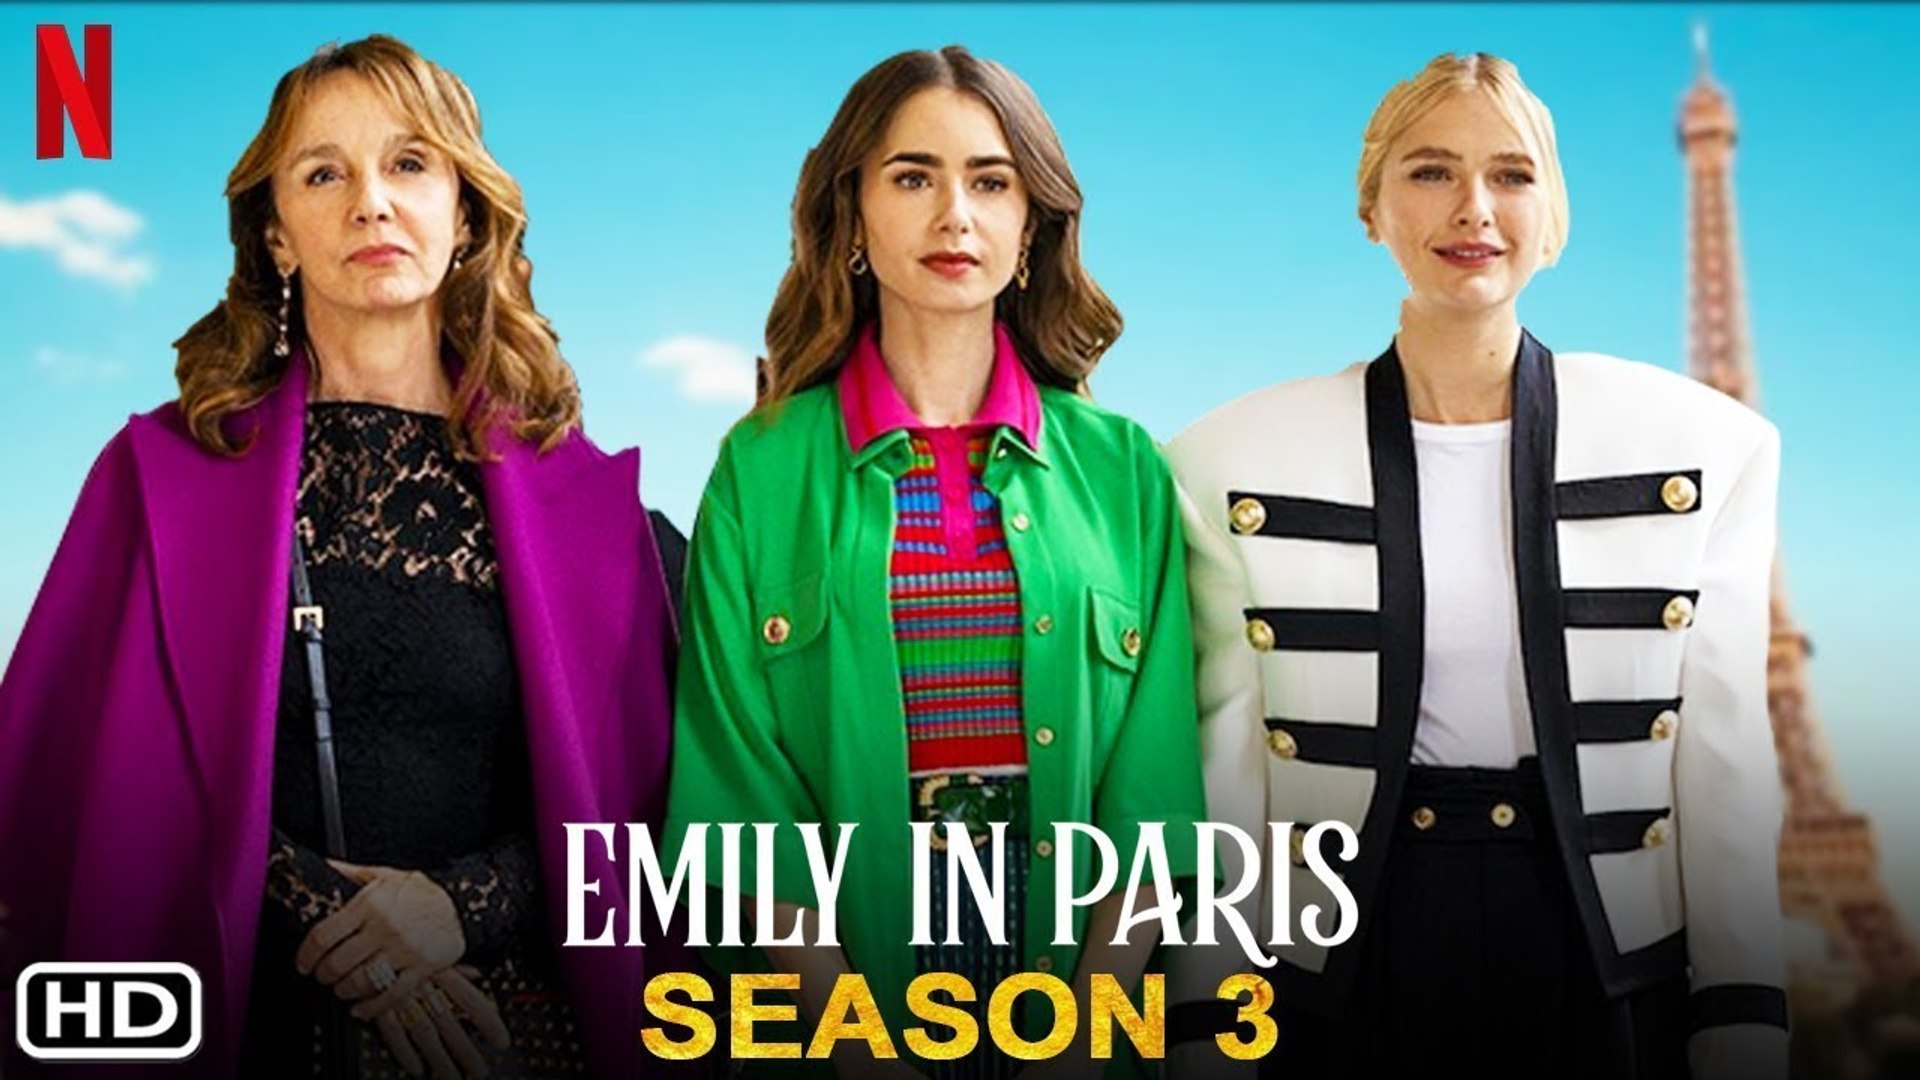 Emily in Paris Season 3: Plot, Cast, Release Date, Trailer